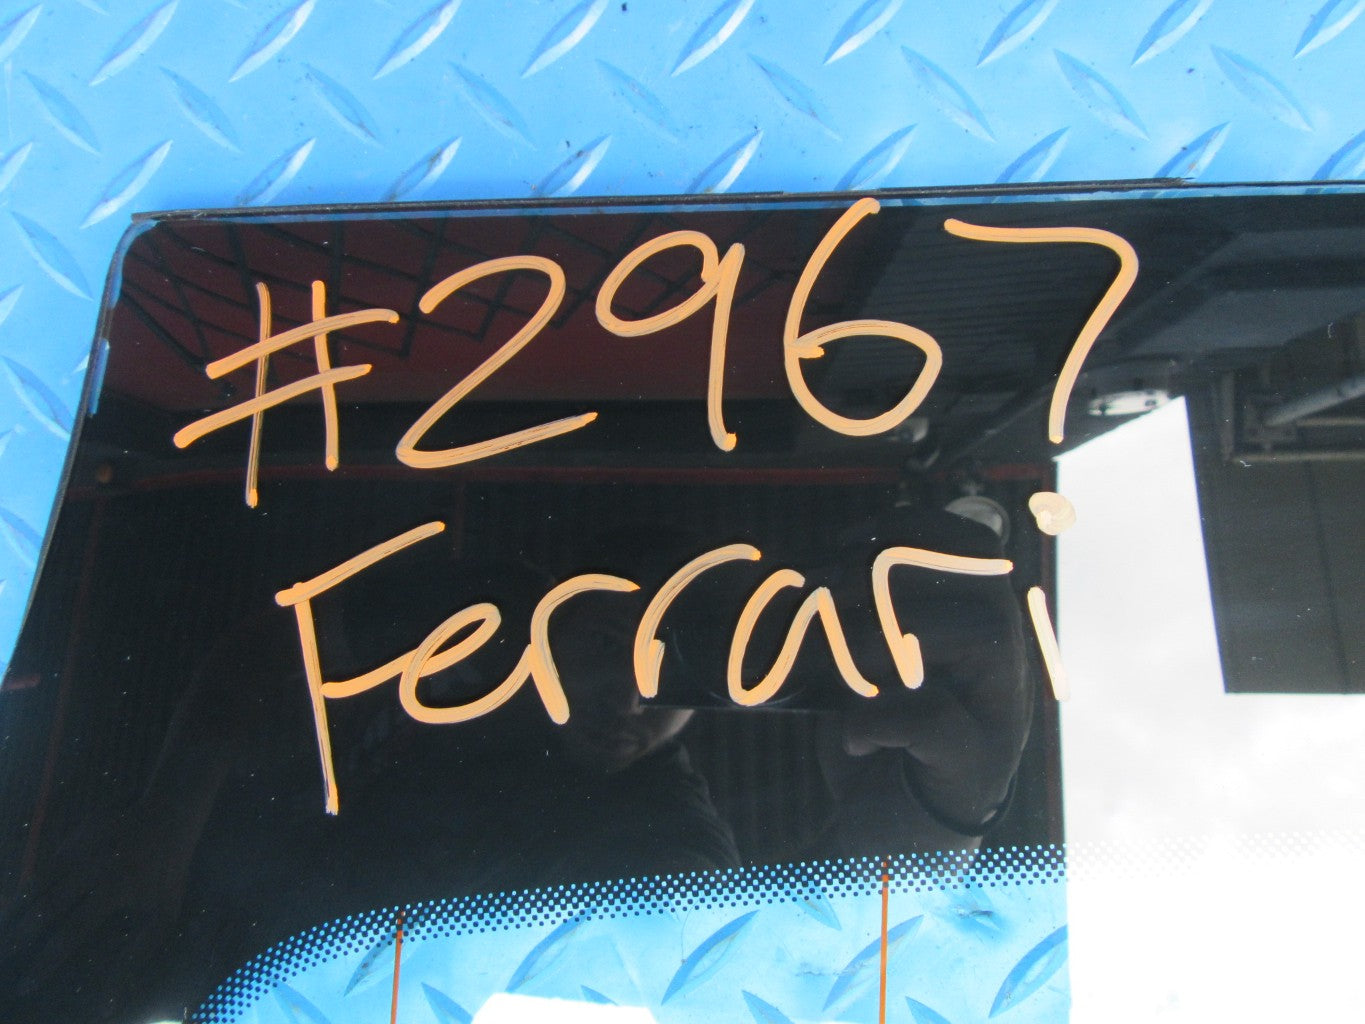 Ferrari 812 Superfast rear back engine glass #2967